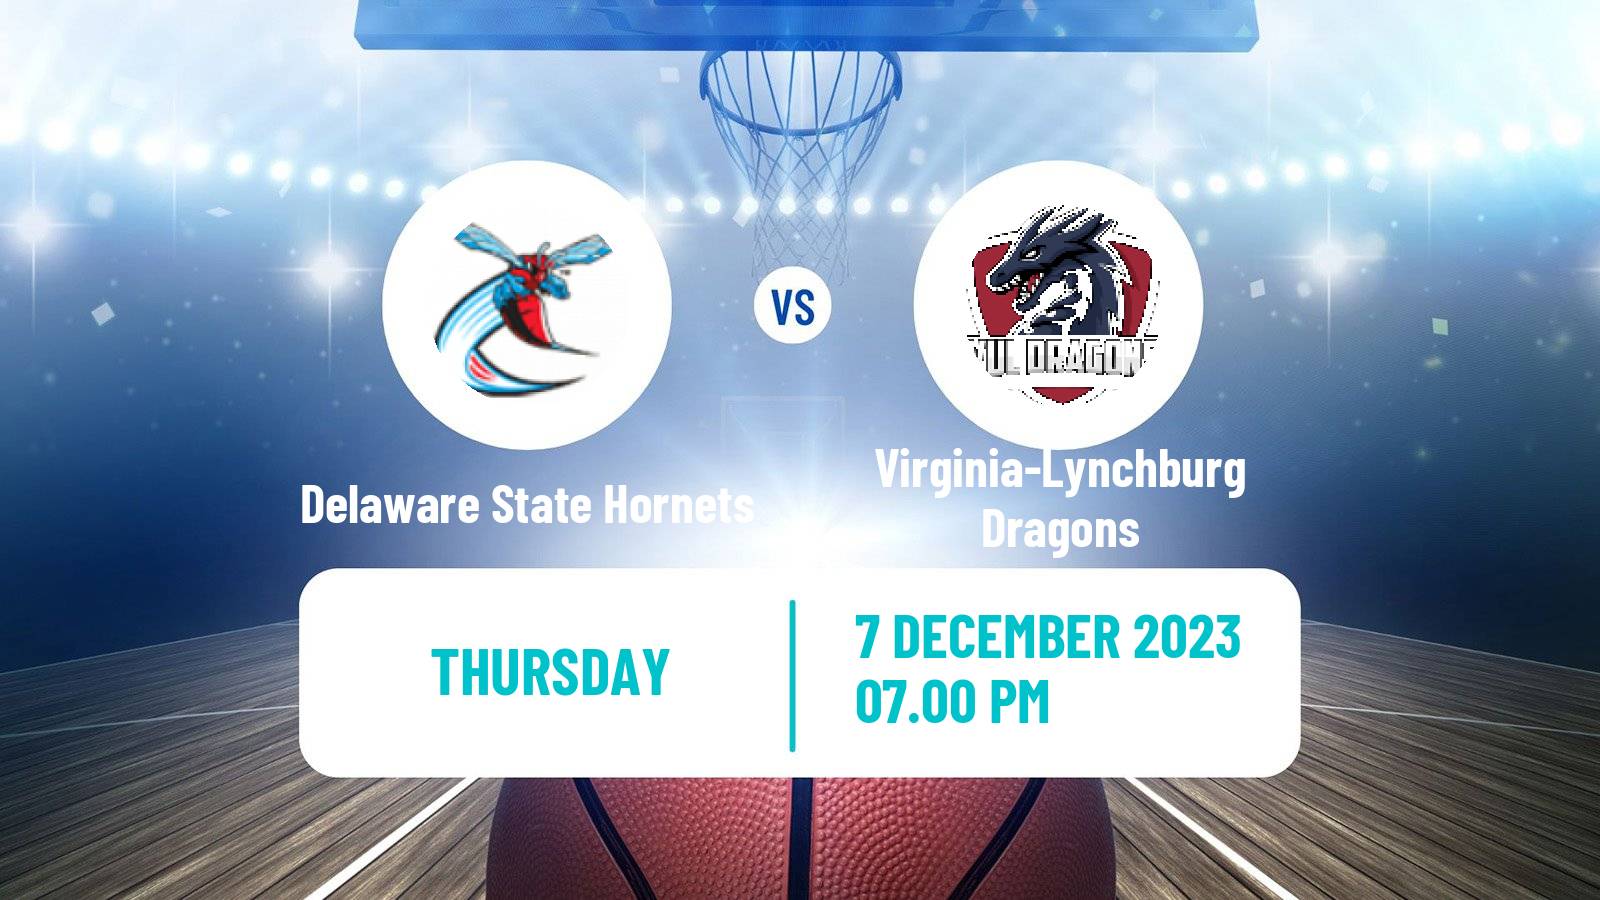 Virginia-Lynchburg Dragons Vs Uncg Spartans Live Stream & Score Match Today Ncaam 2023  